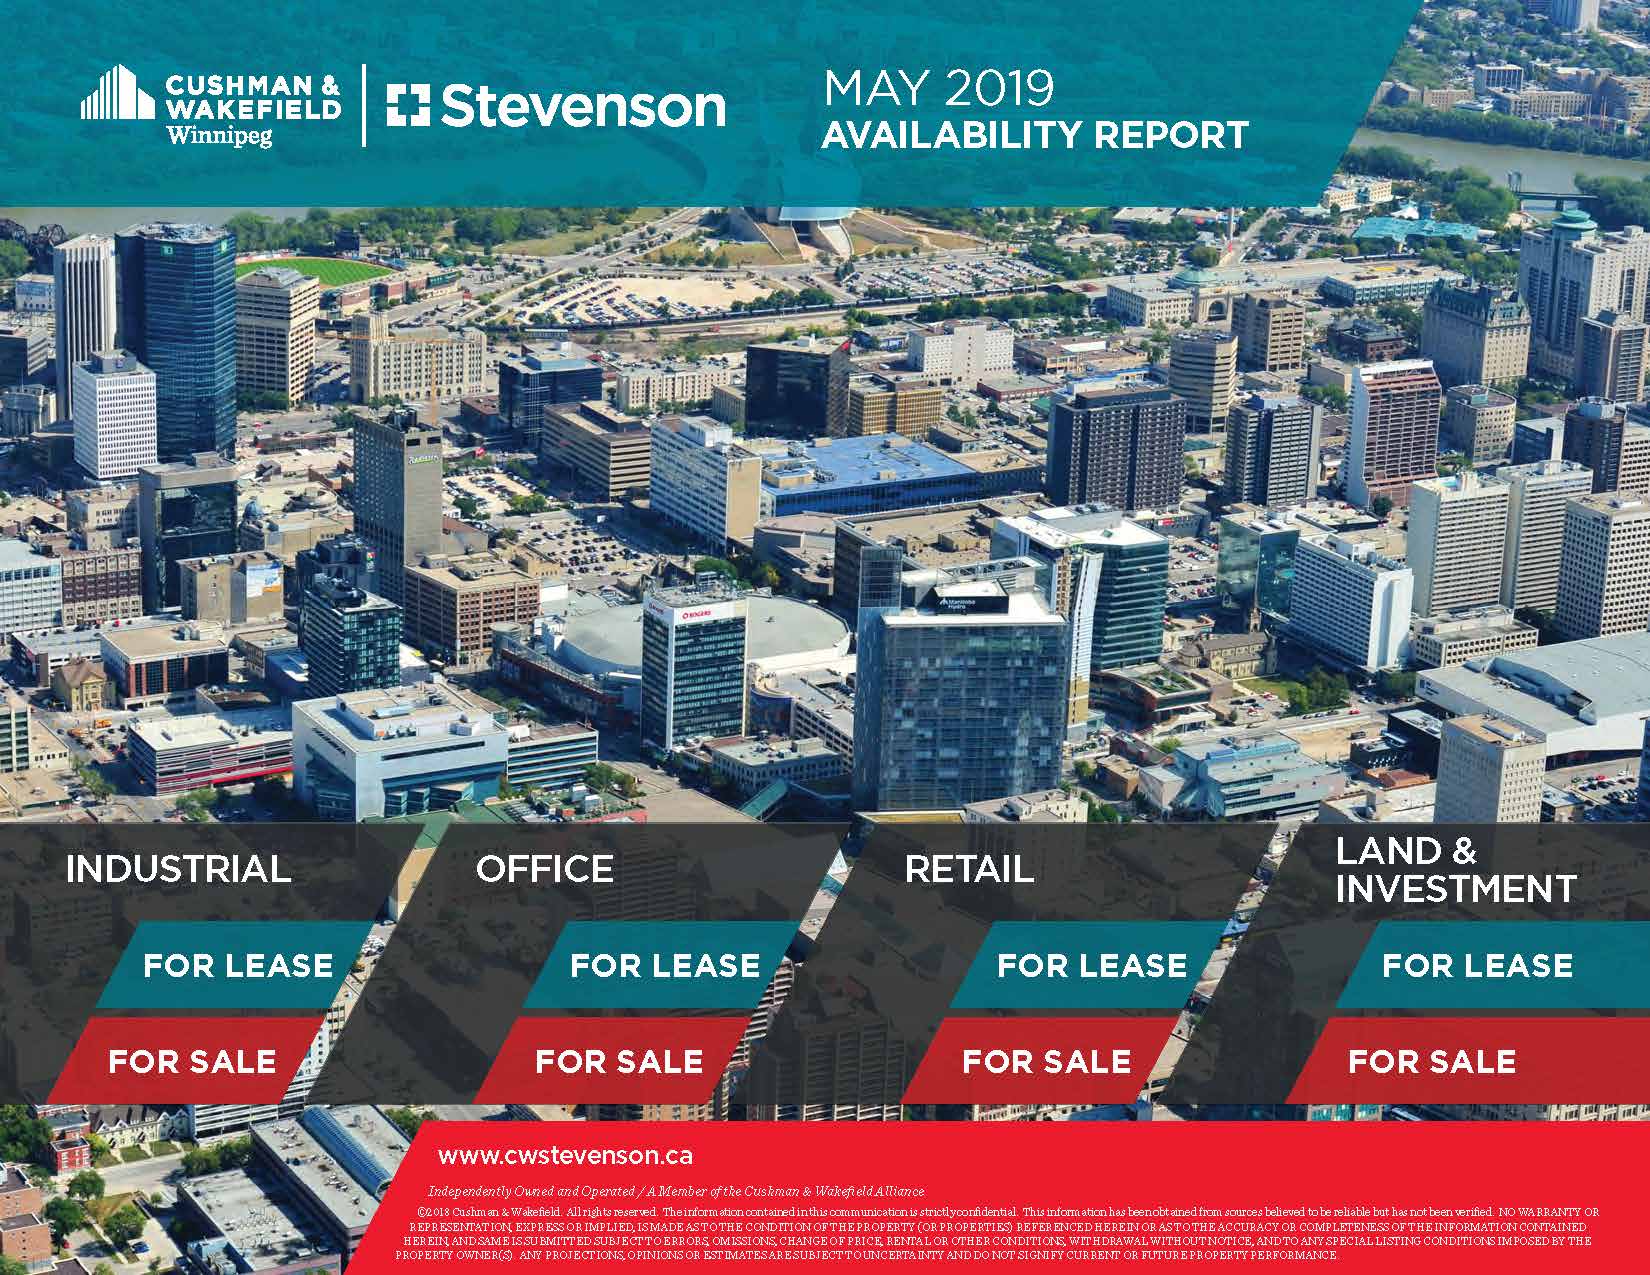 May 2019 property availability report in winnipeg, cws cushman wakefield Stevenson